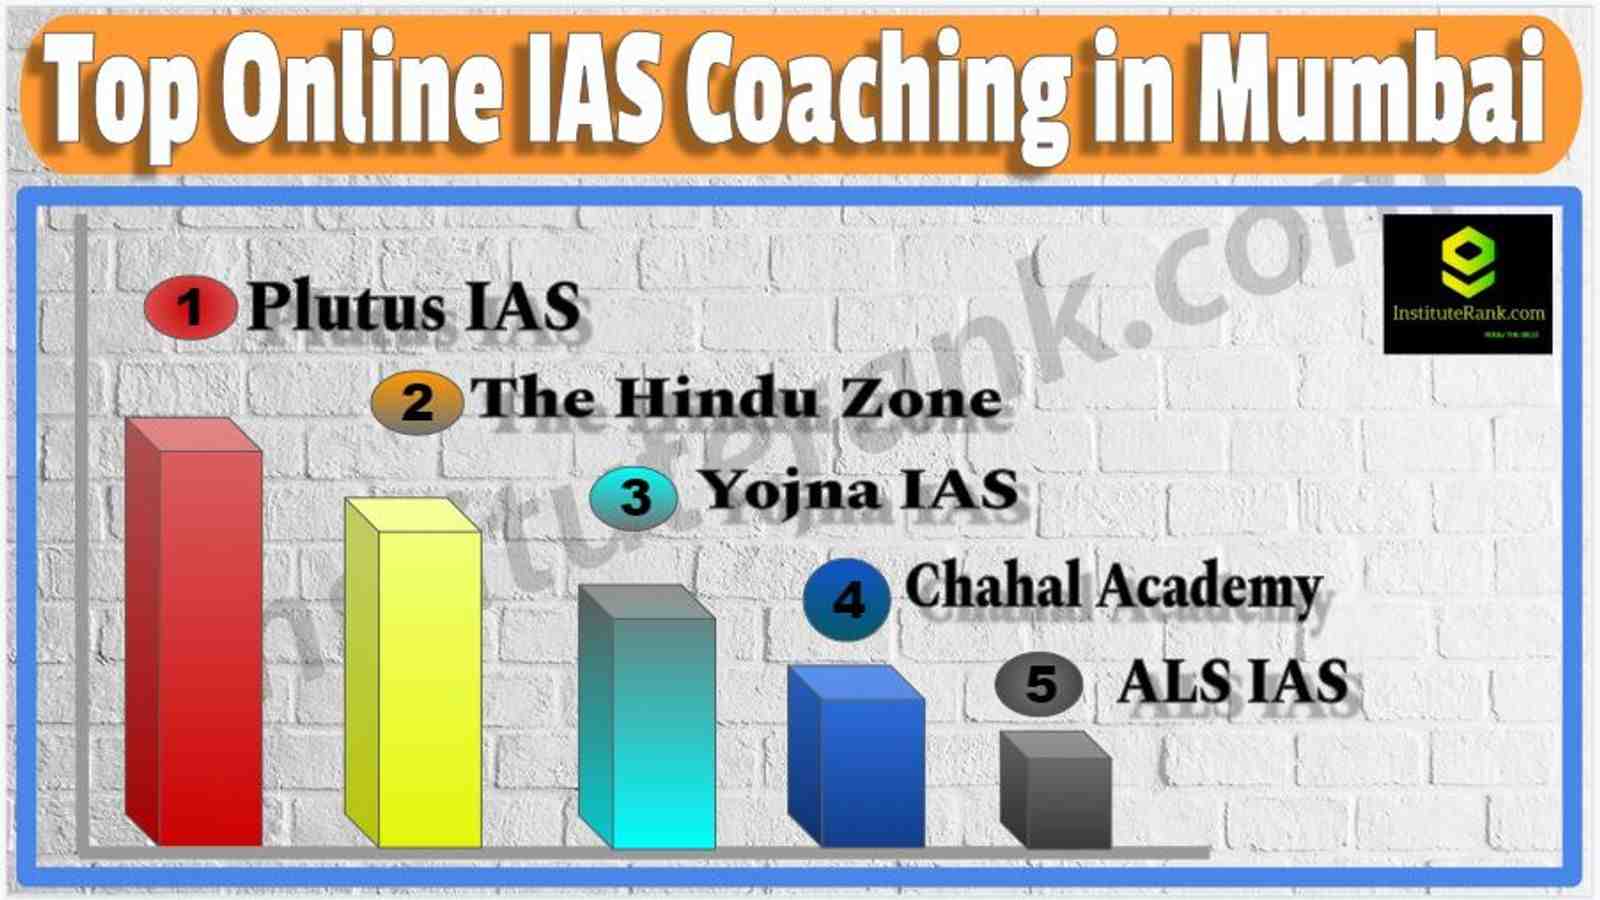 Best Online IAS Coaching Classes in Mumbai